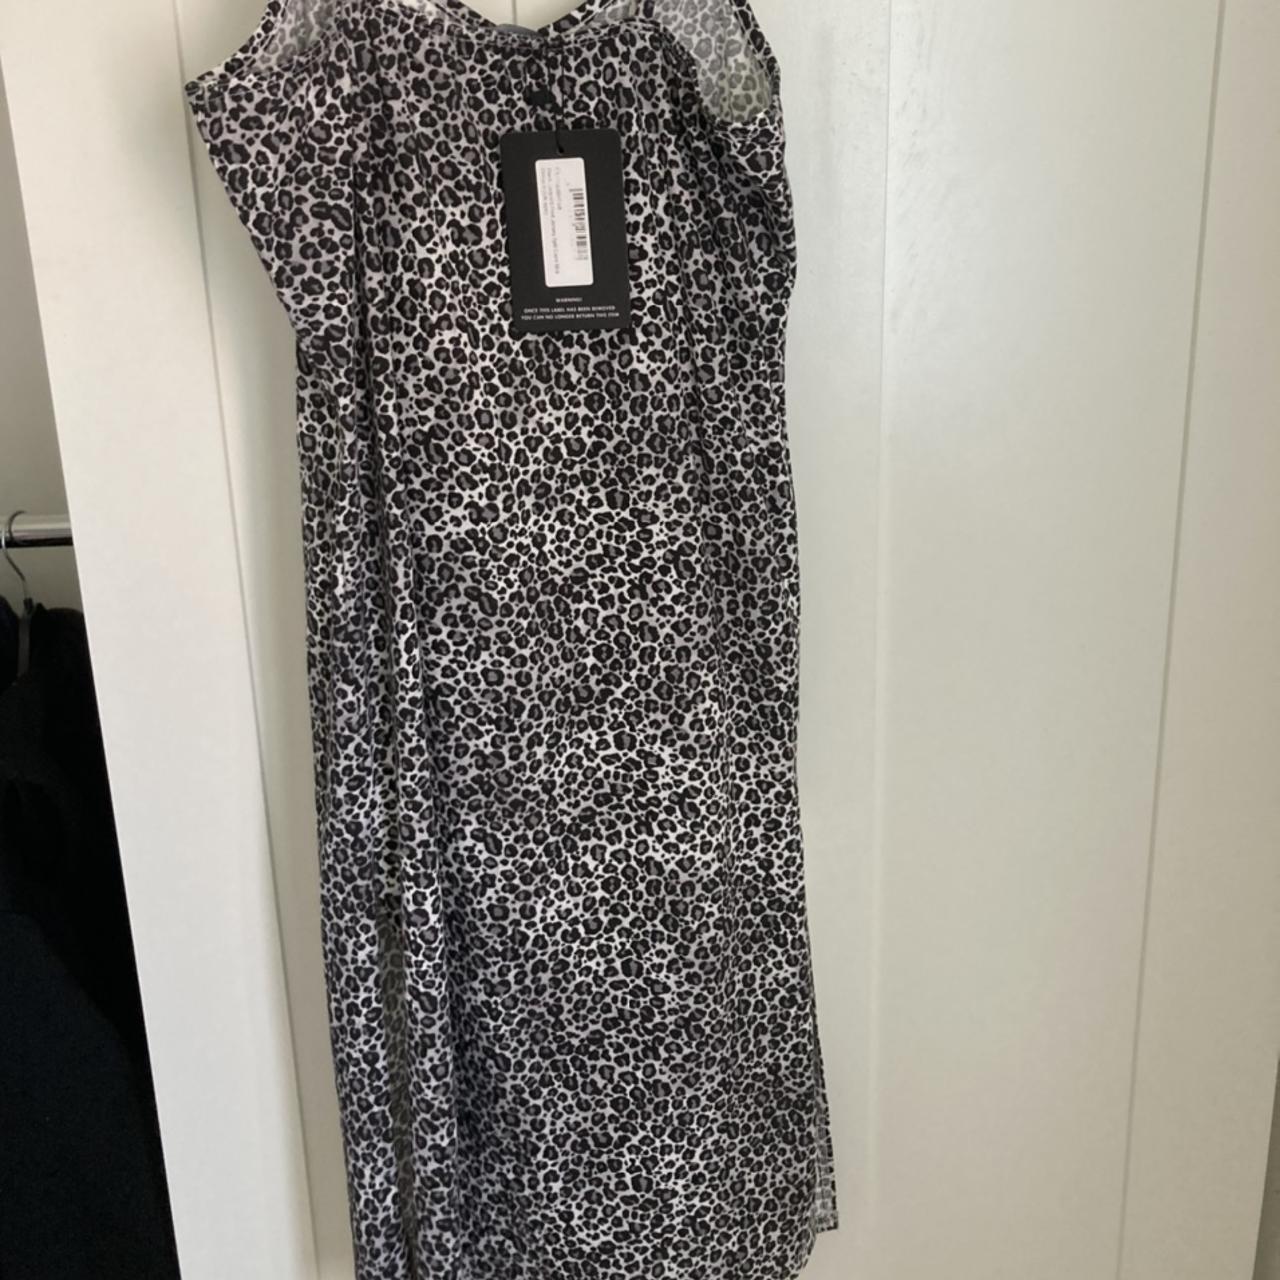 Product Image 3 - cheetah print slip dress from